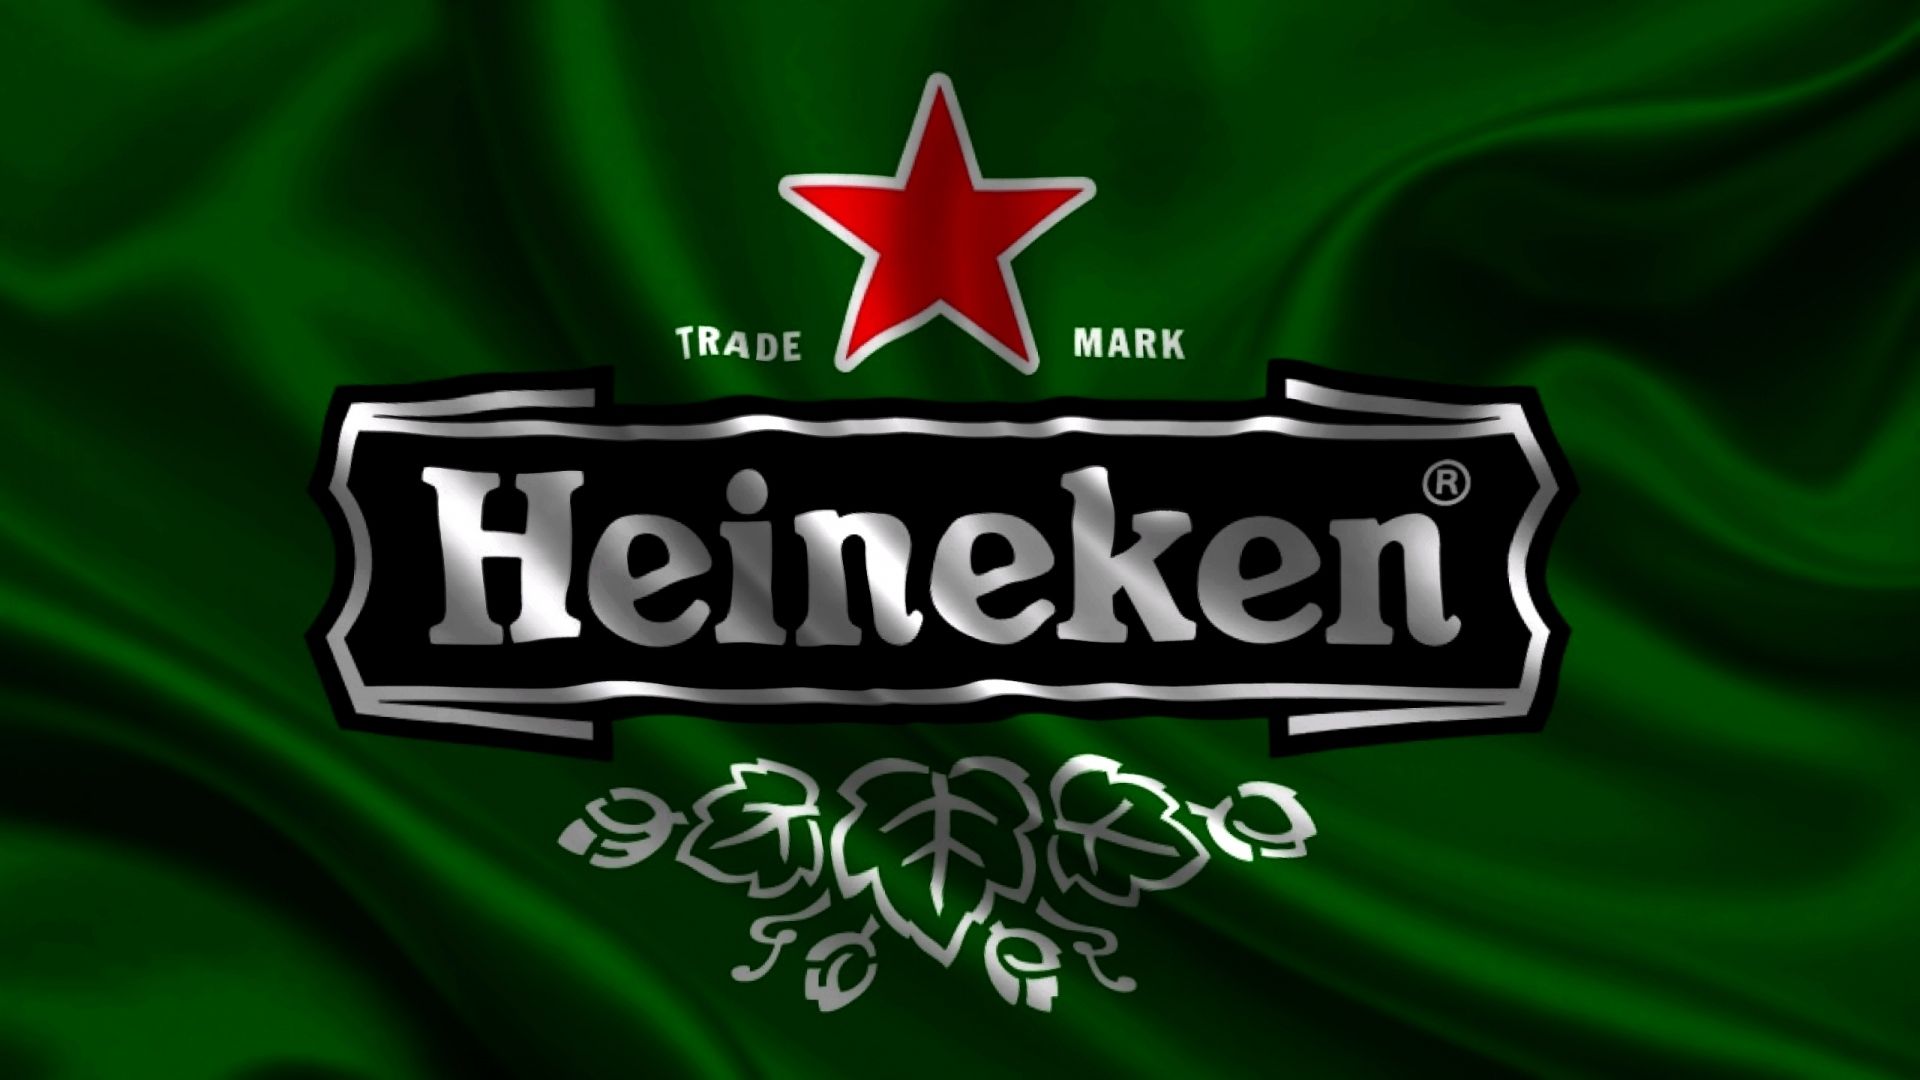 Heineken, Beer, Brand, Satin, Flag. Heineken, Logo wallpaper hd, Adidas logo wallpaper